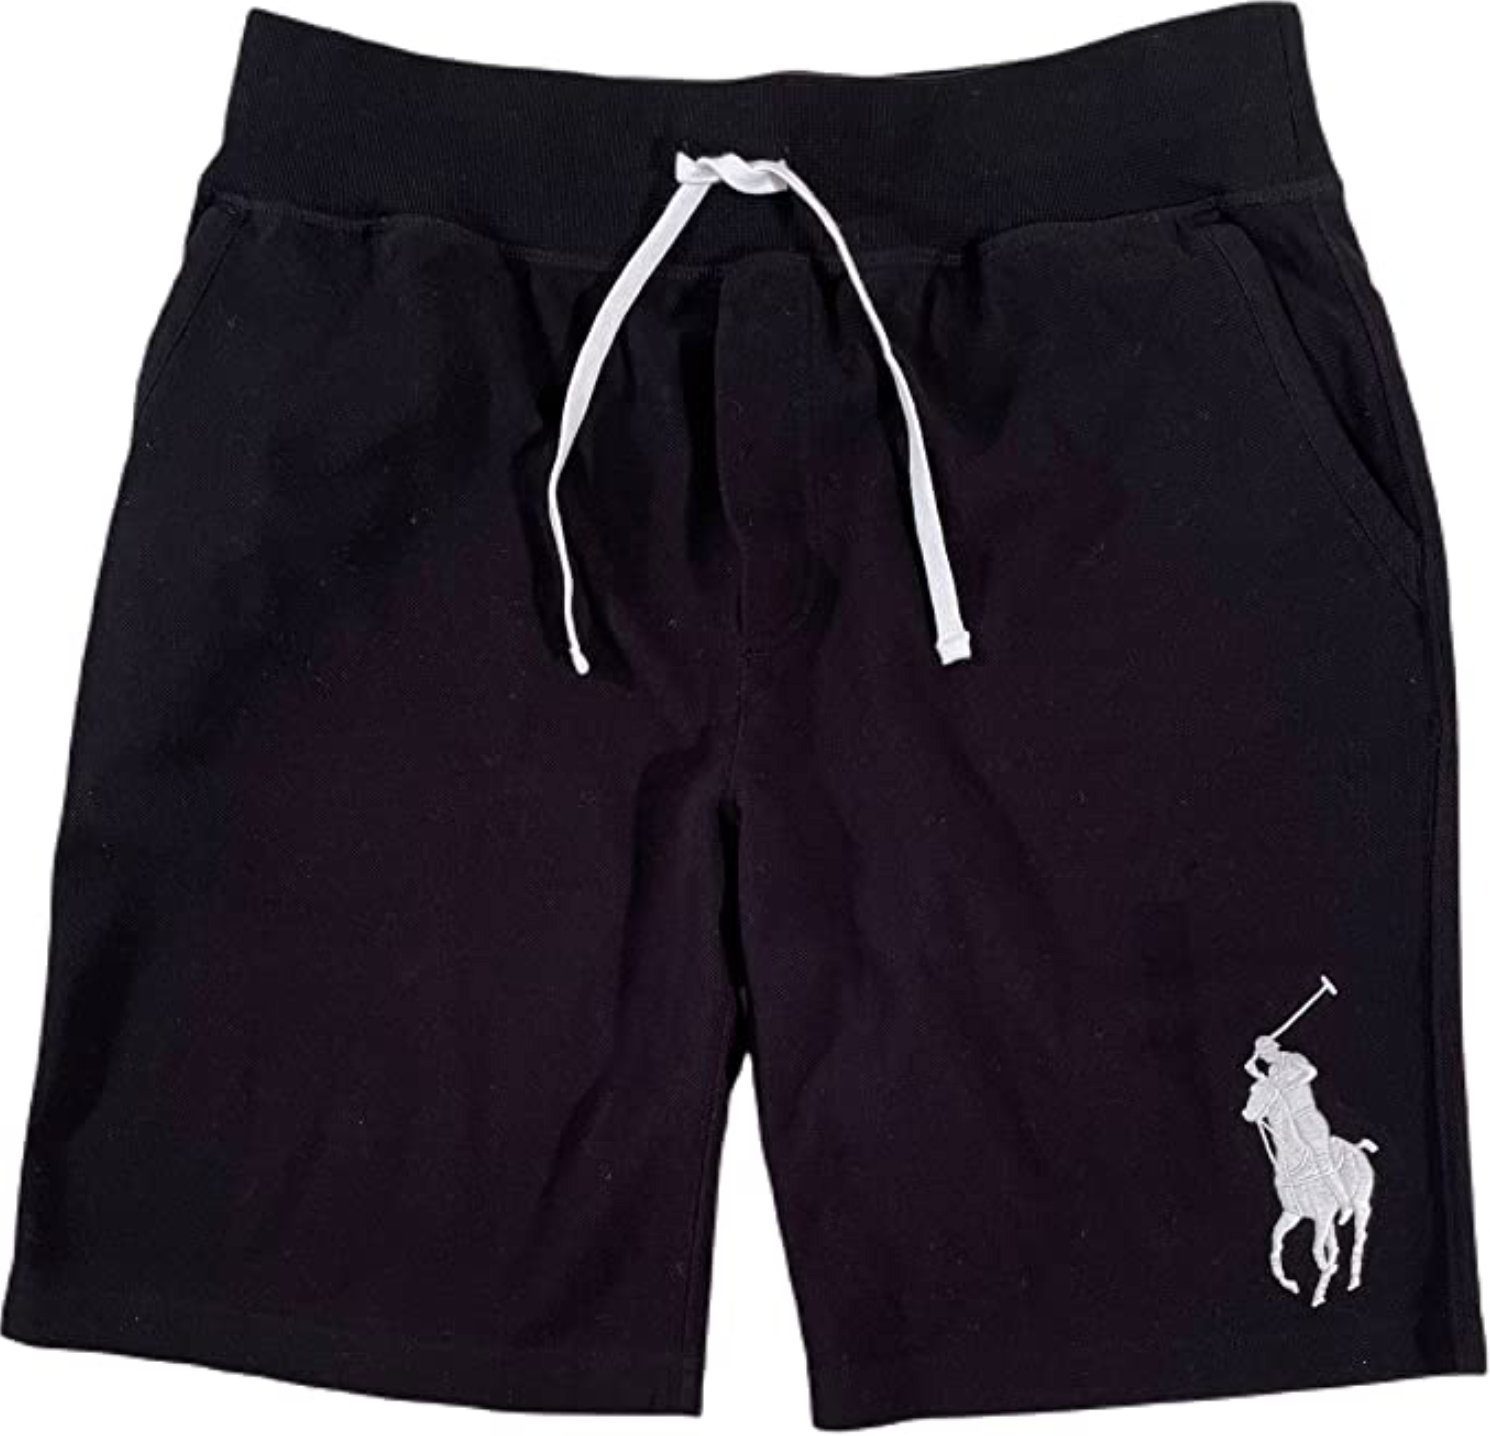 Ralph Lauren Shorts POLO RALPH LAUREN Drawstring Big Pony Shorts Bermuda Mesh Pants Trouse